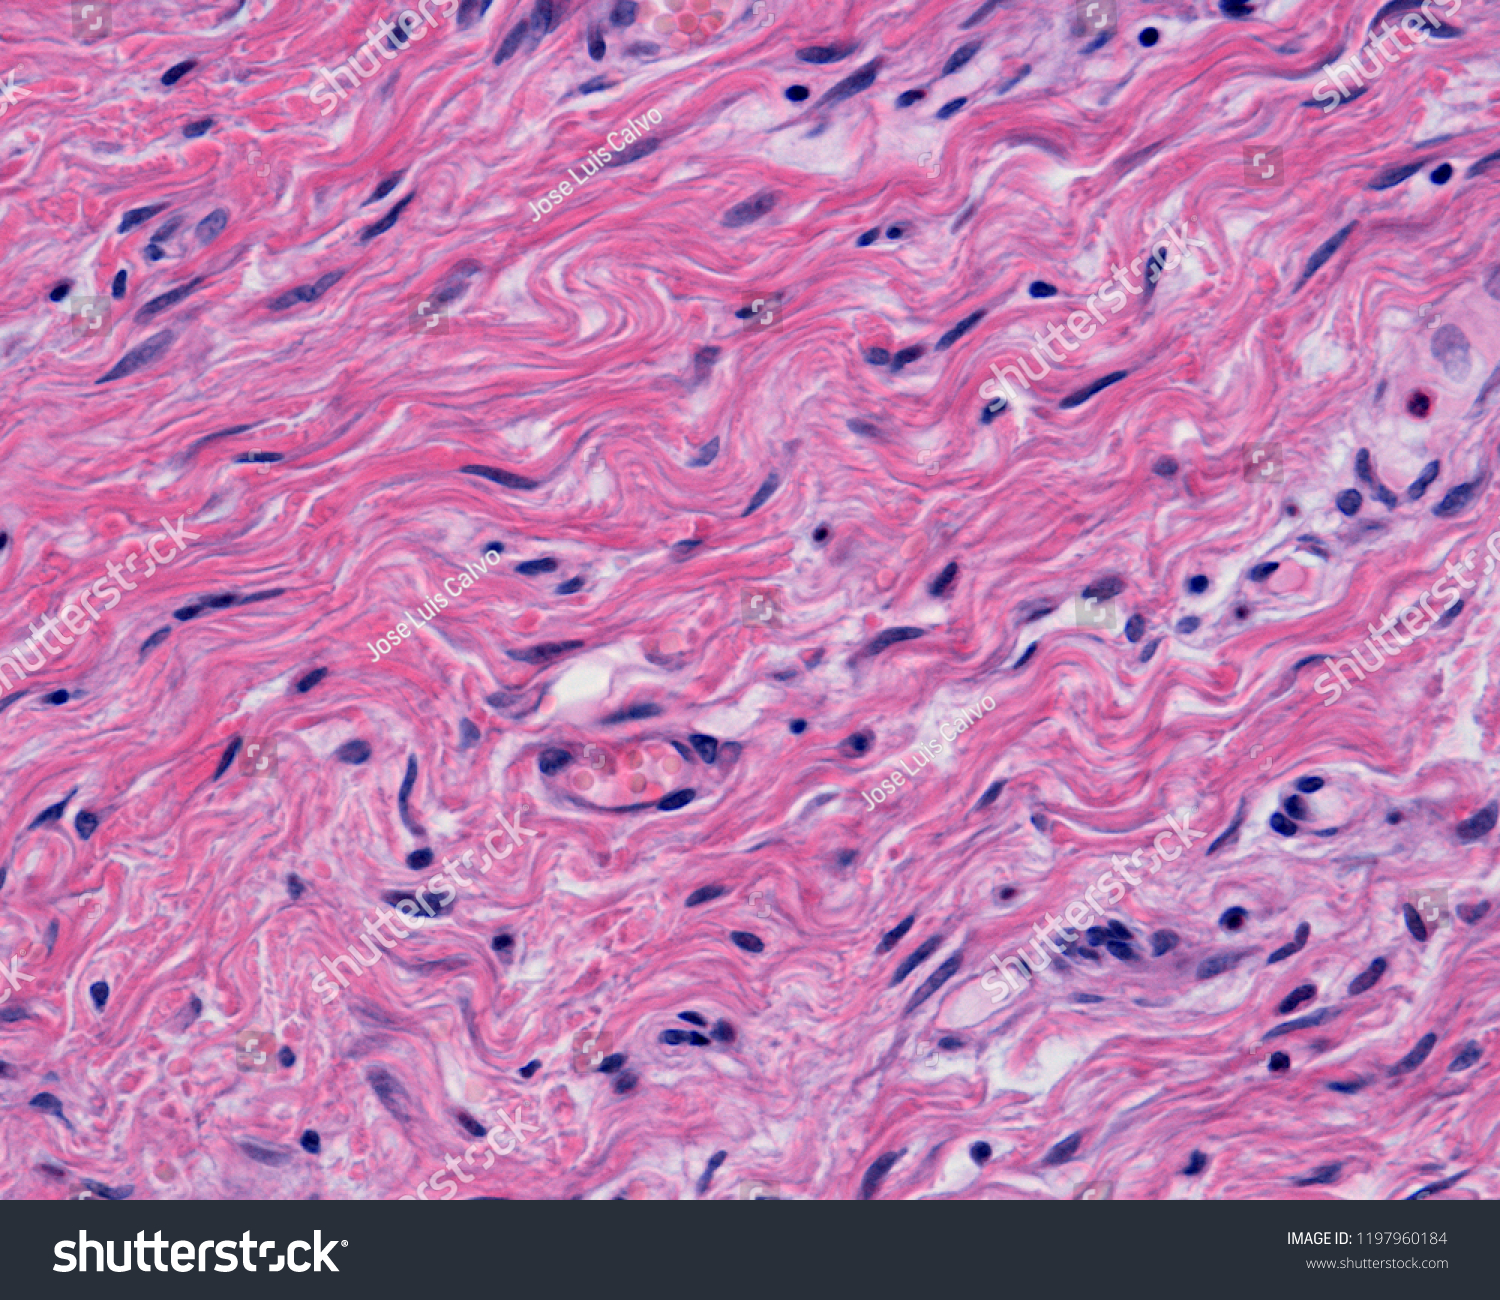 Reticular Dense Irregular Connective Tissue Stock Photo 1197960184 | Shutterstock